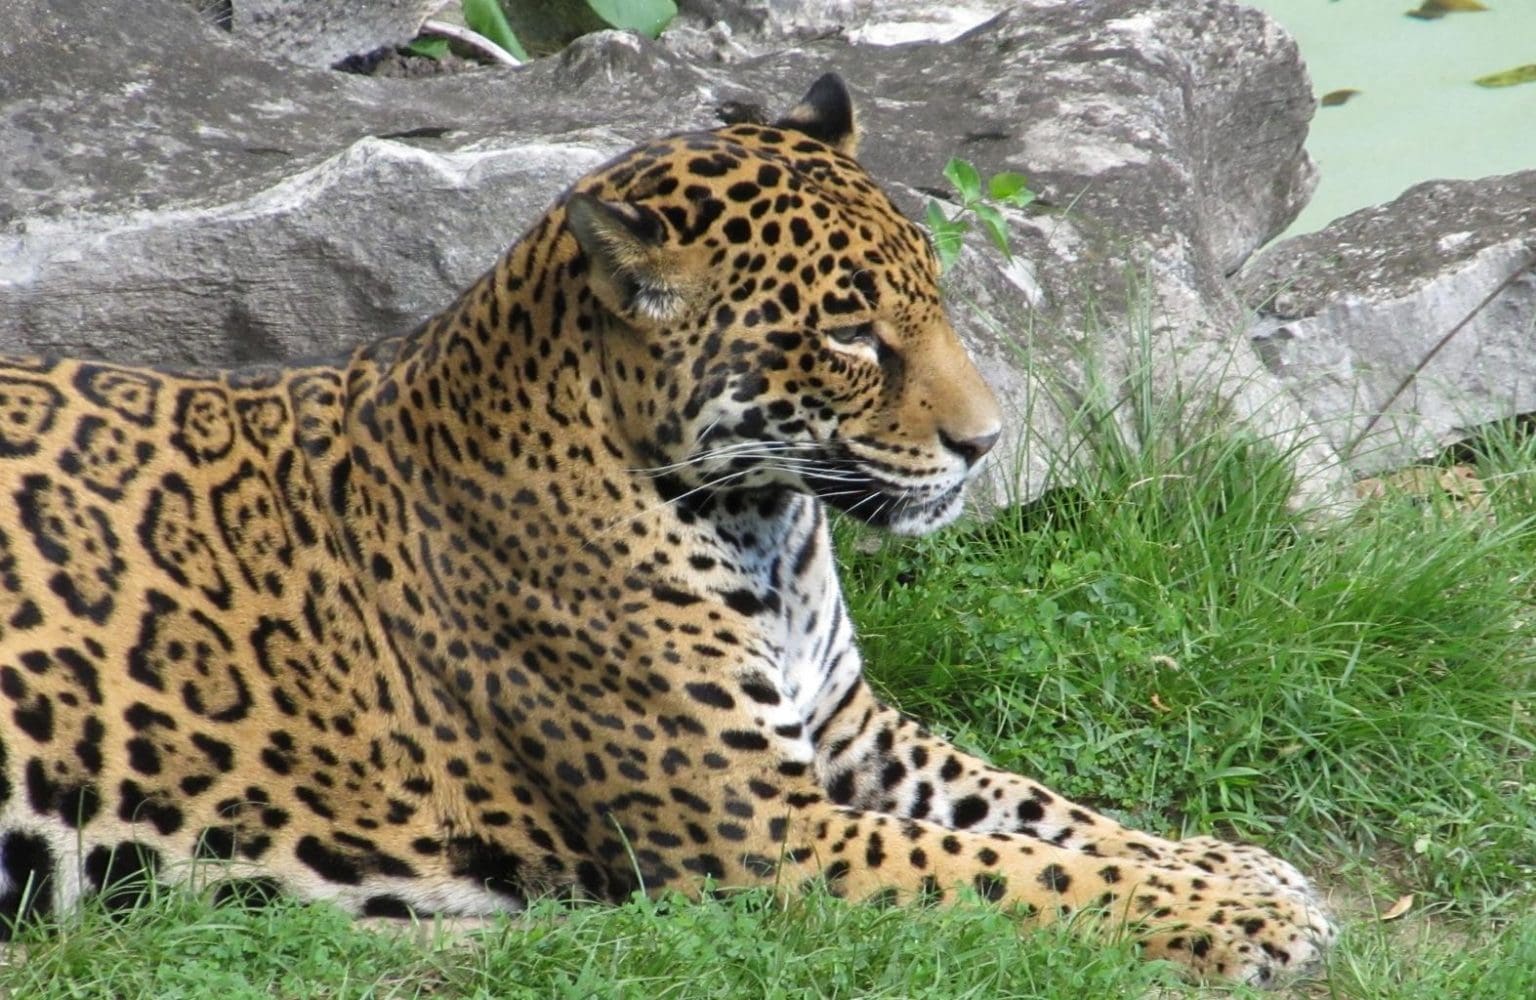 Jaguar relaxing in grass 2